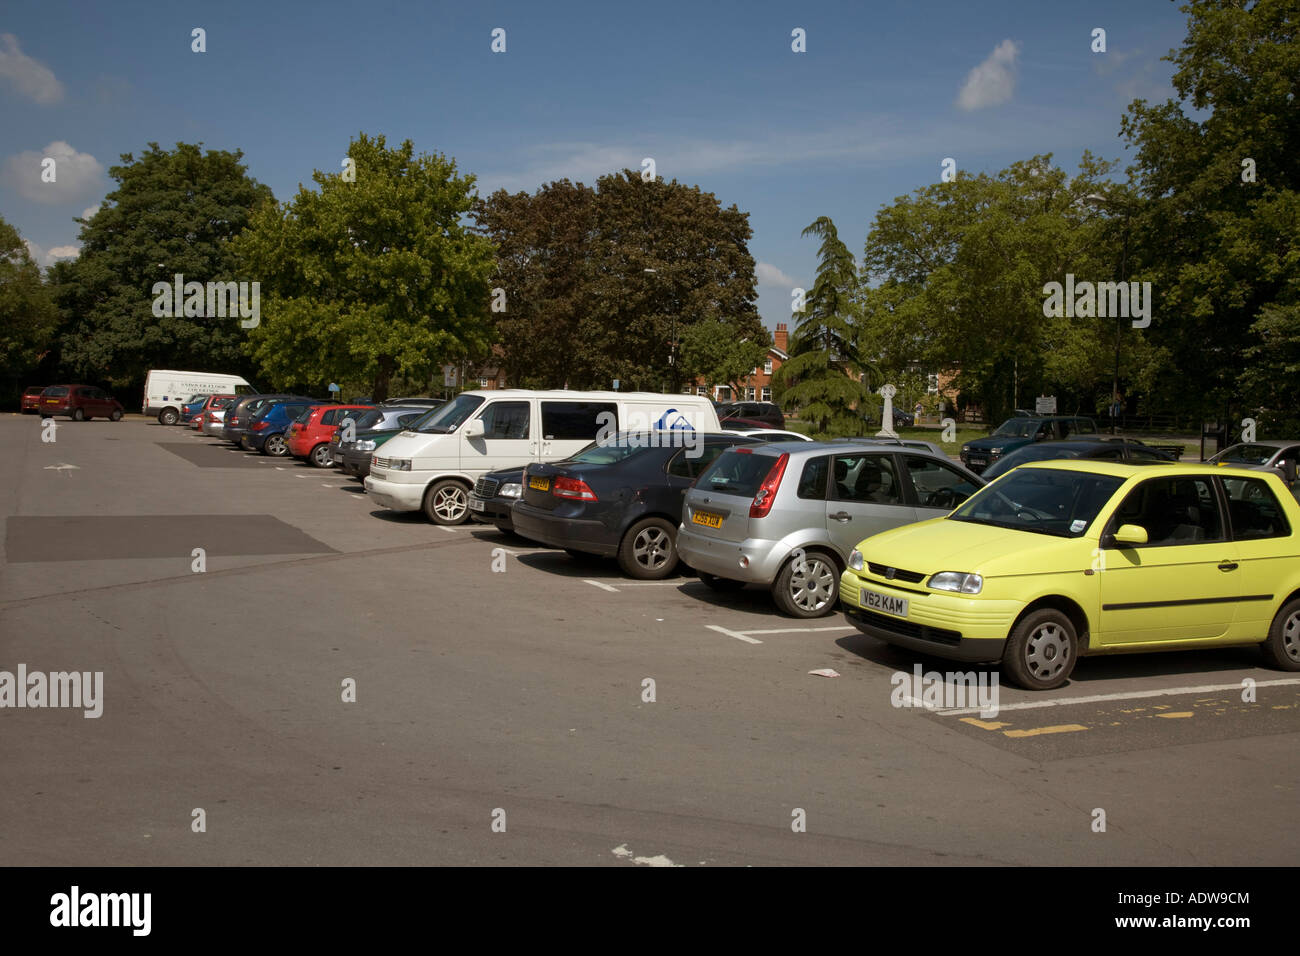 Car park at Amesbury Wiltshire Stock Photo